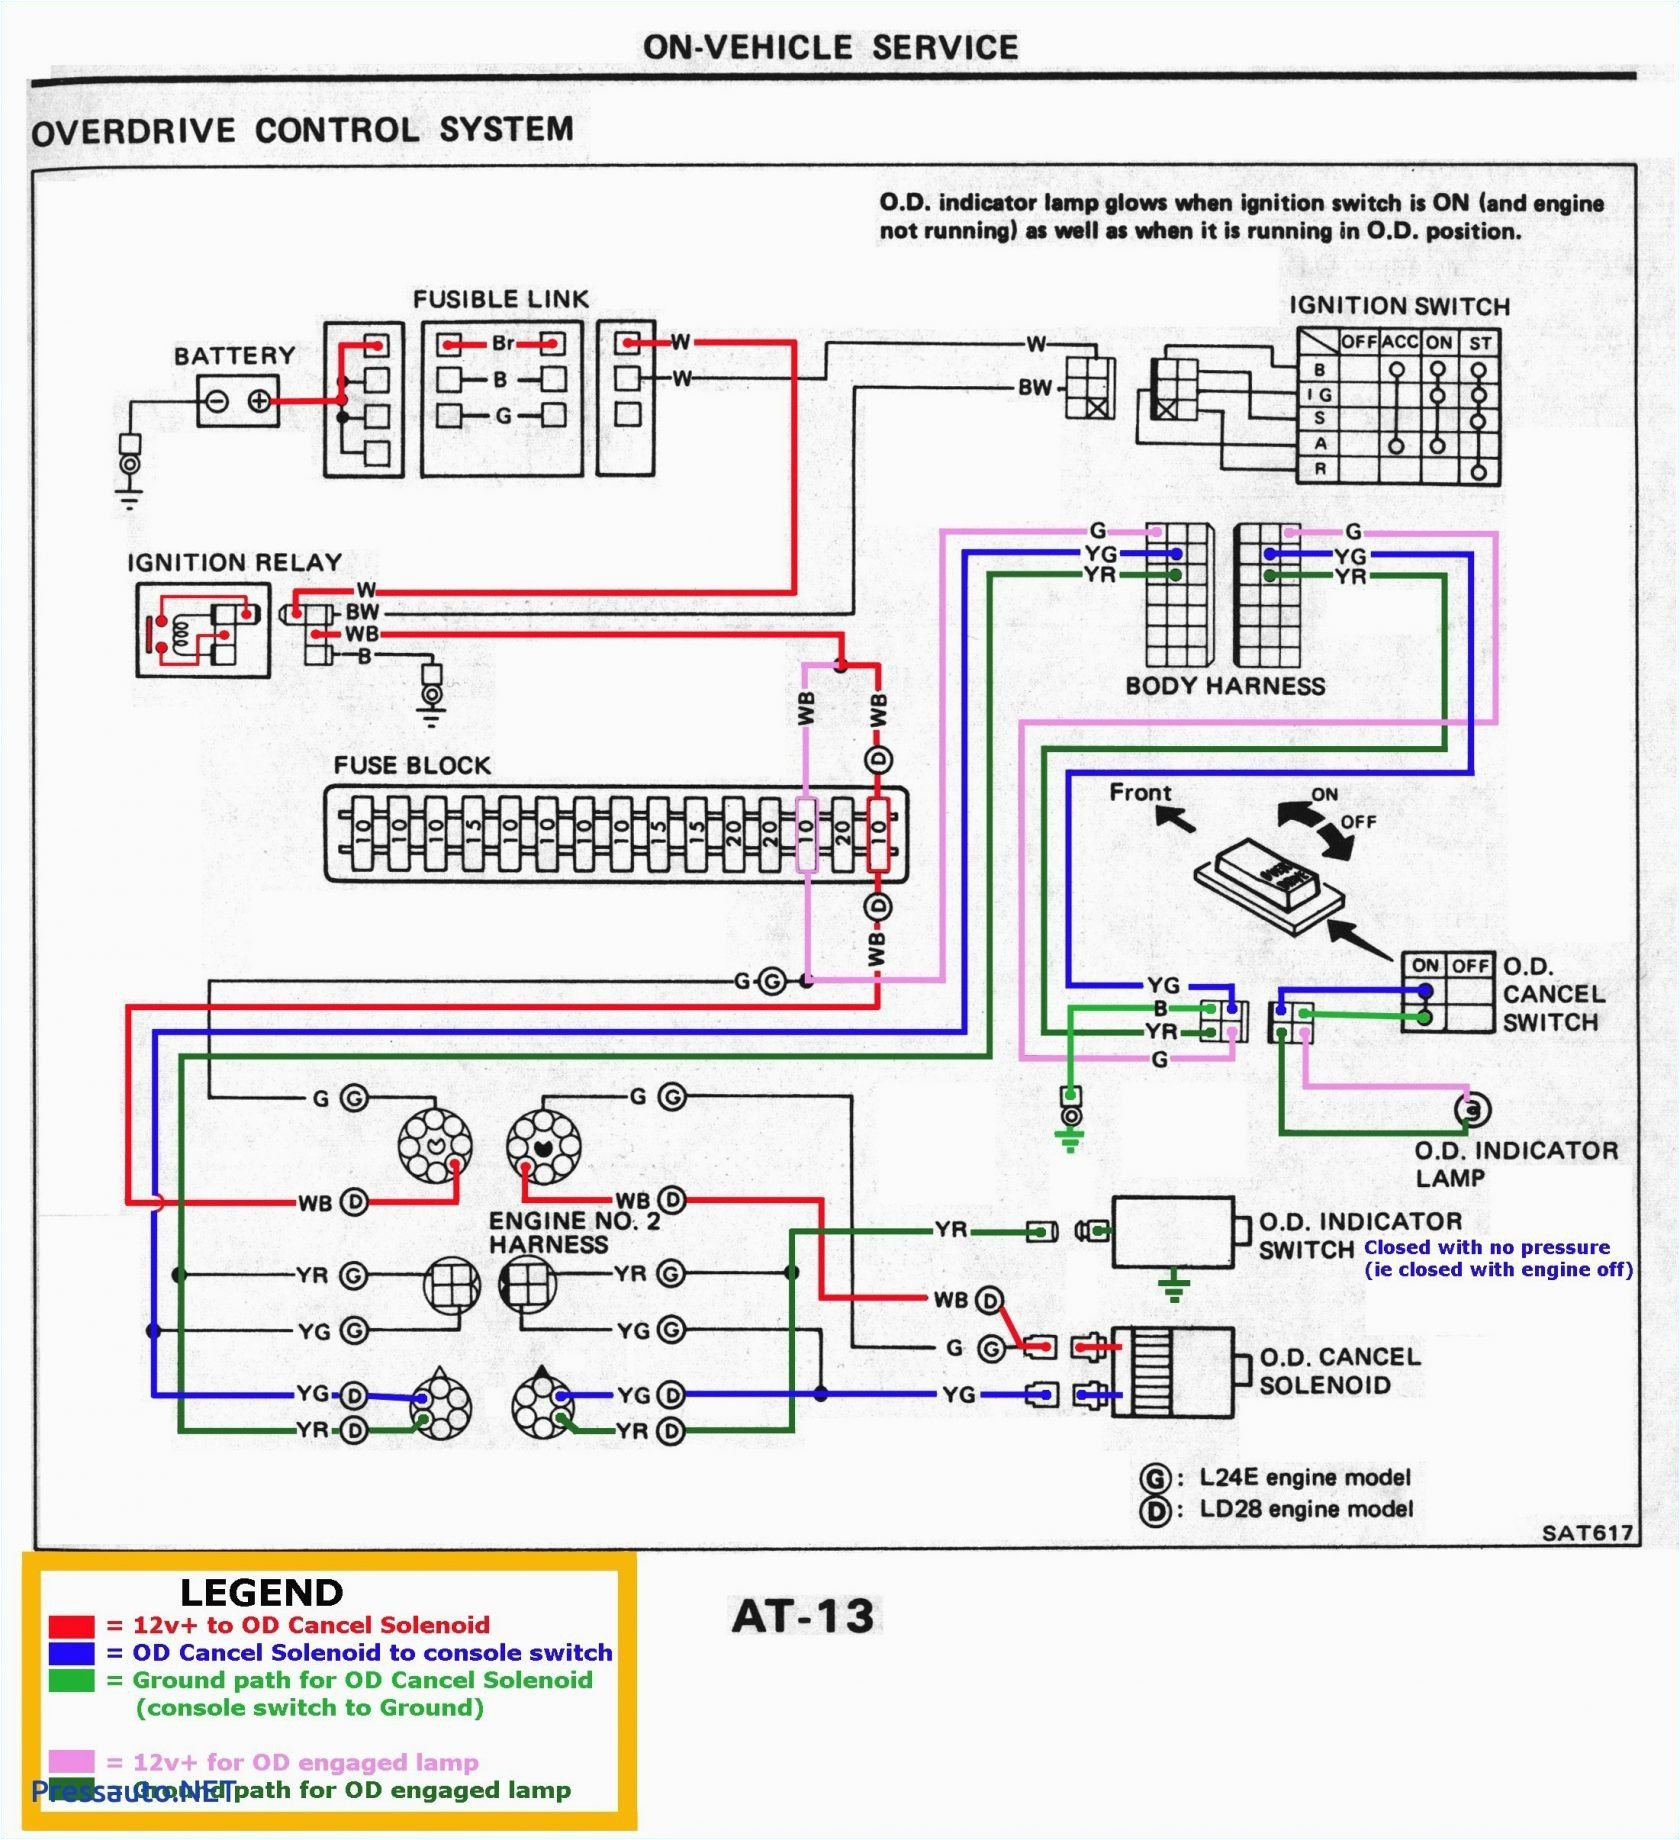 volvo diagram 2013 wiring vhd84f200 share circuit diagrams volvo diagram 2013 wiring vhd84f200